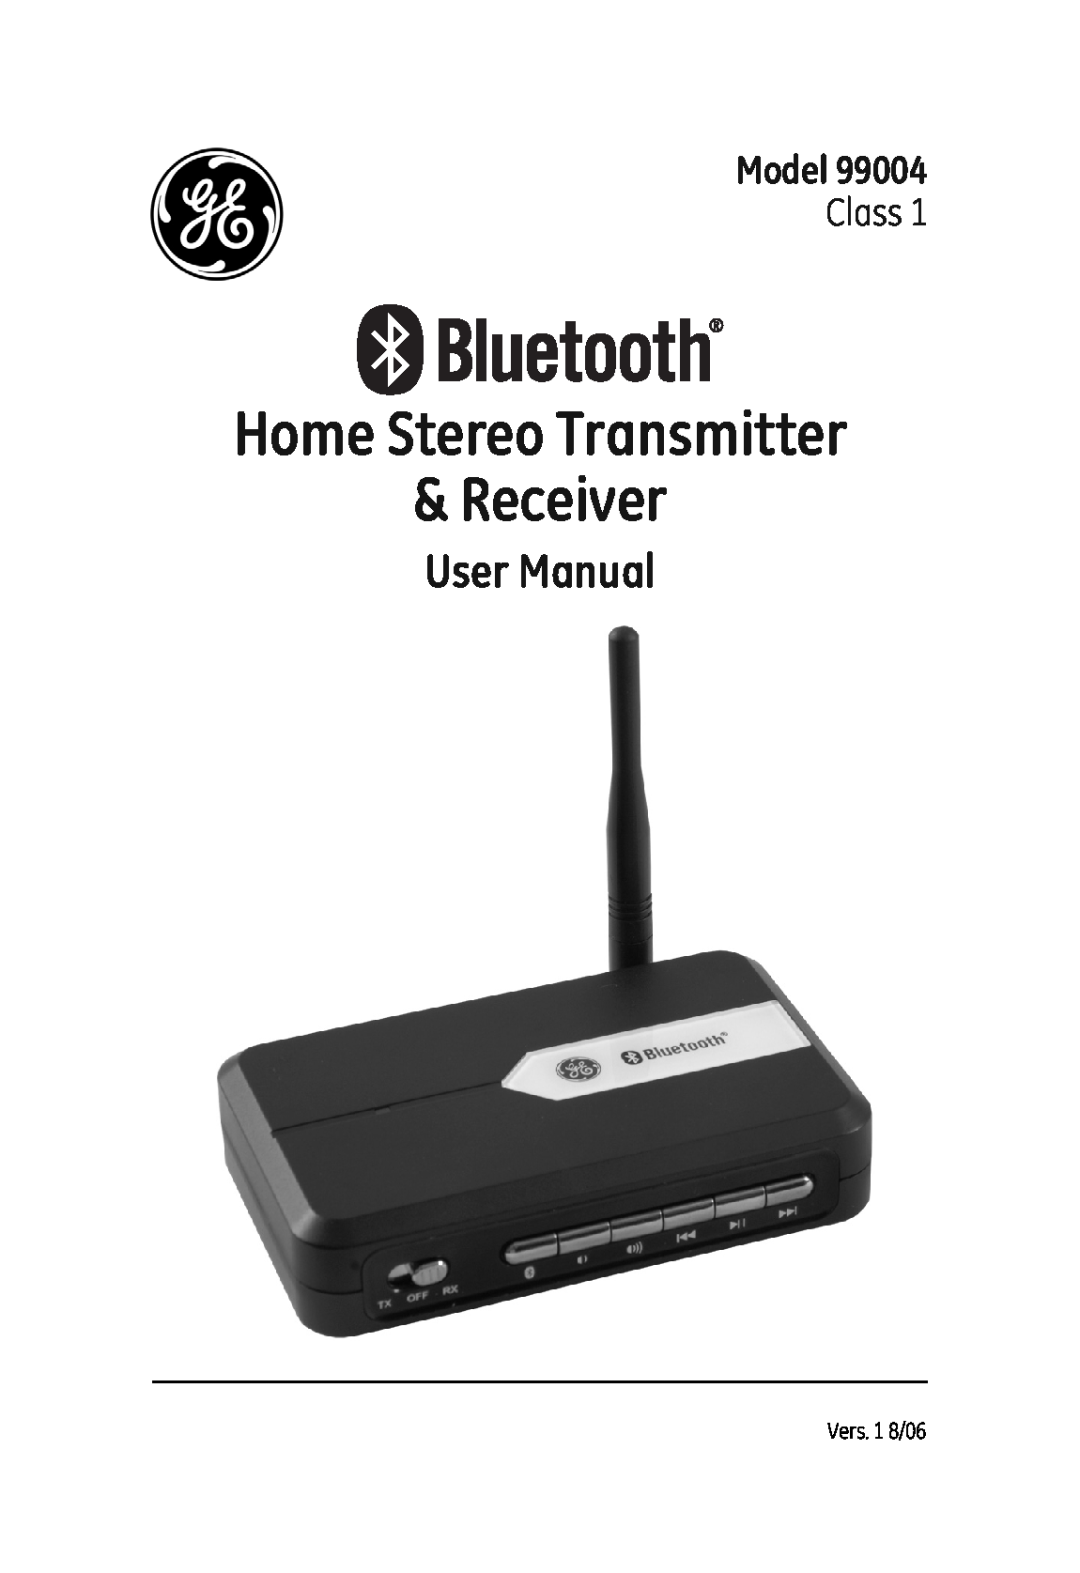 Jasco 99004 user manual Home Stereo Transmitter & Receiver, Model, Class 